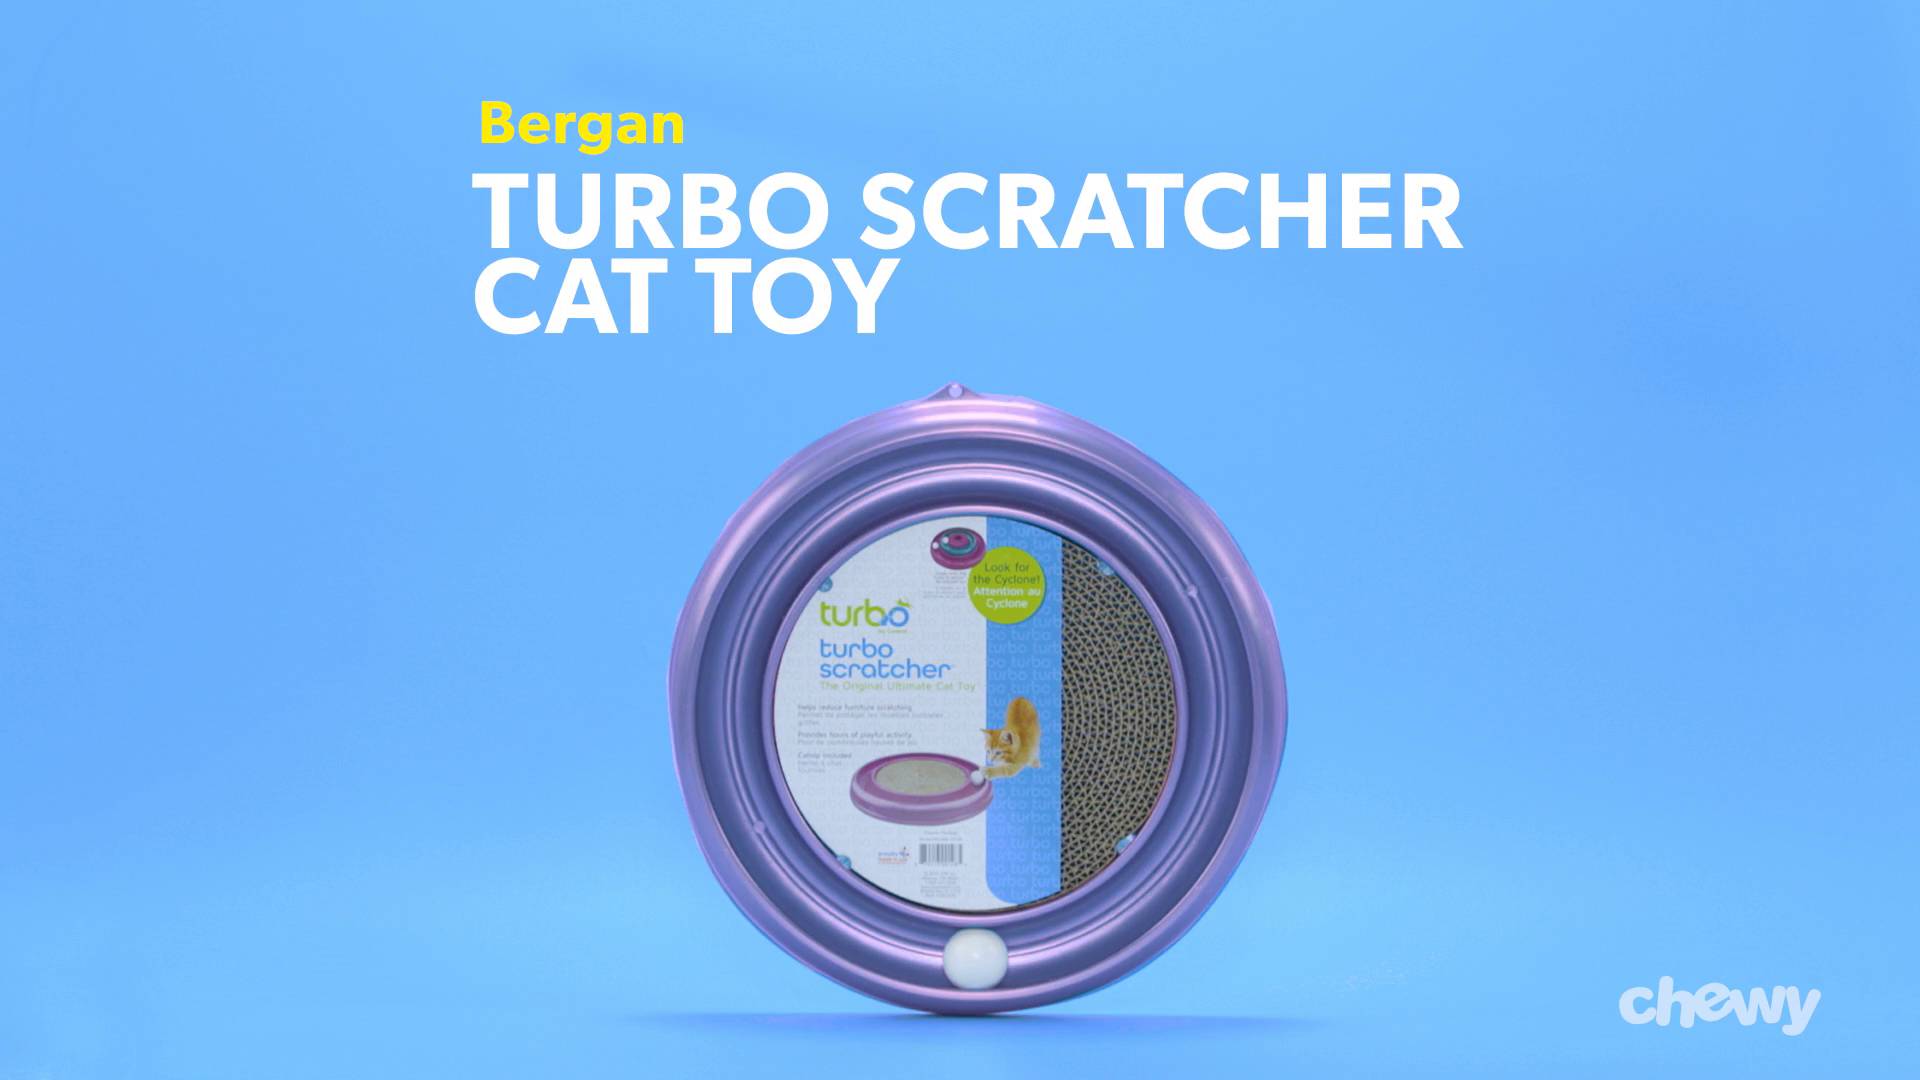 bergan turbo scratcher cat toy